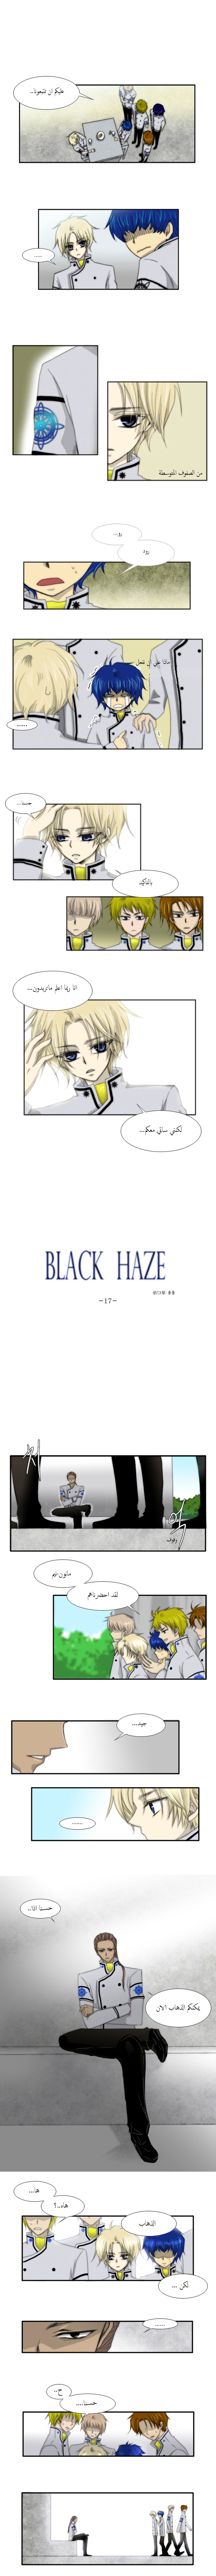 Black Haze: Chapter 17 - Page 1